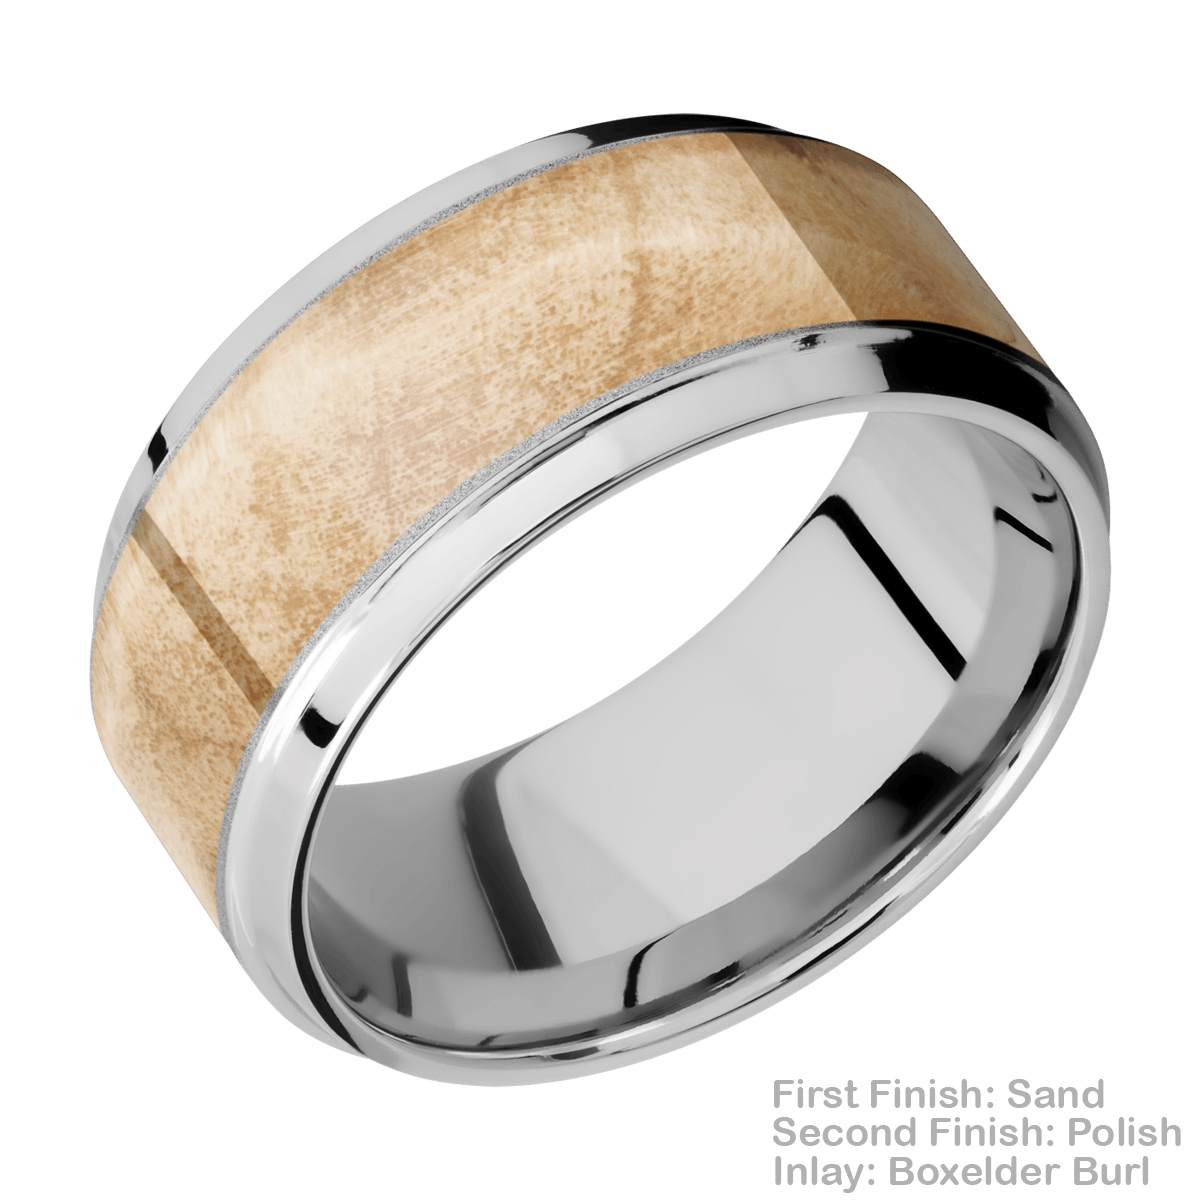 Lashbrook CC10B17(S)/HARDWOOD Cobalt Chrome Wedding Ring or Band